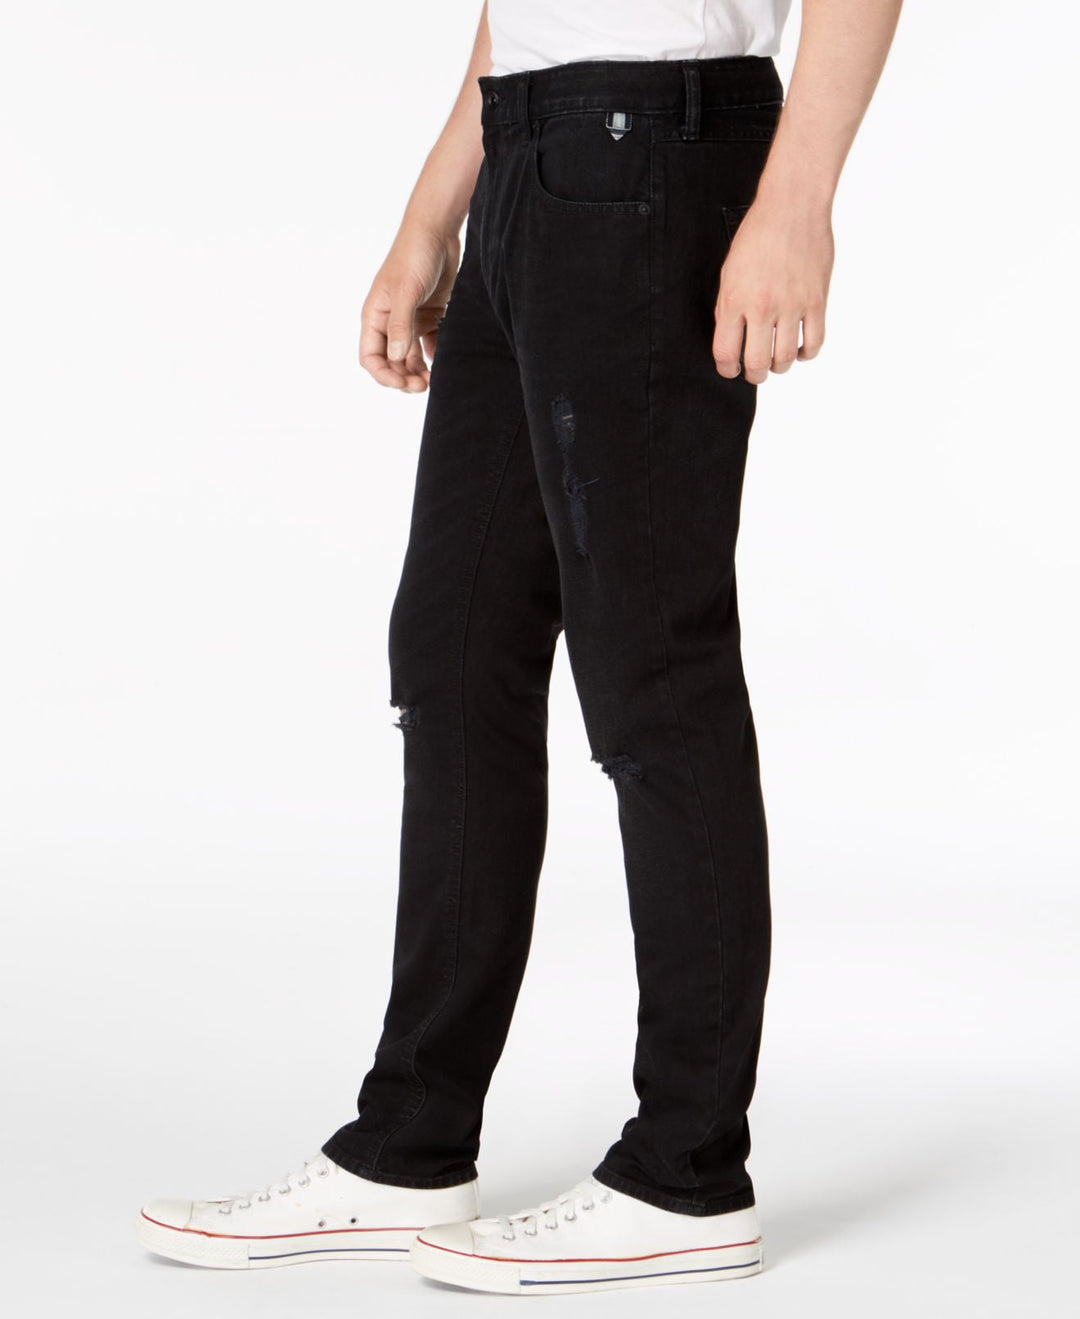 American Rag Men's Slim Fit Stretch Destroyed Jeans Black Size 34X32